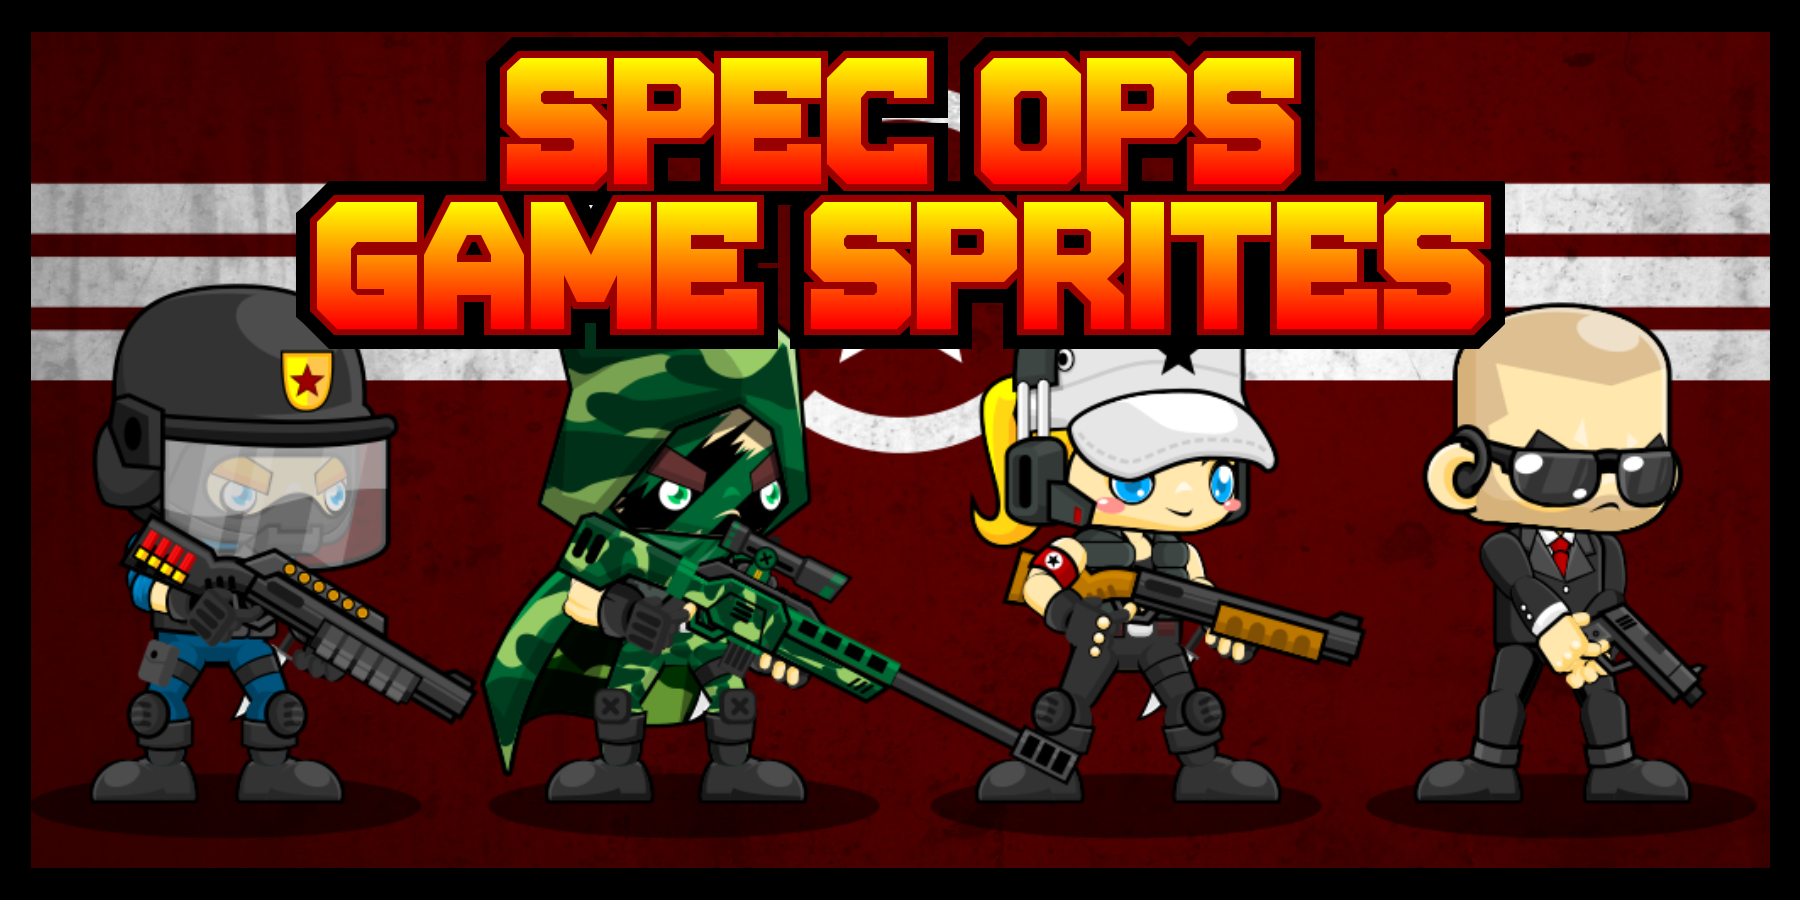 Spec Ops - Game Sprites